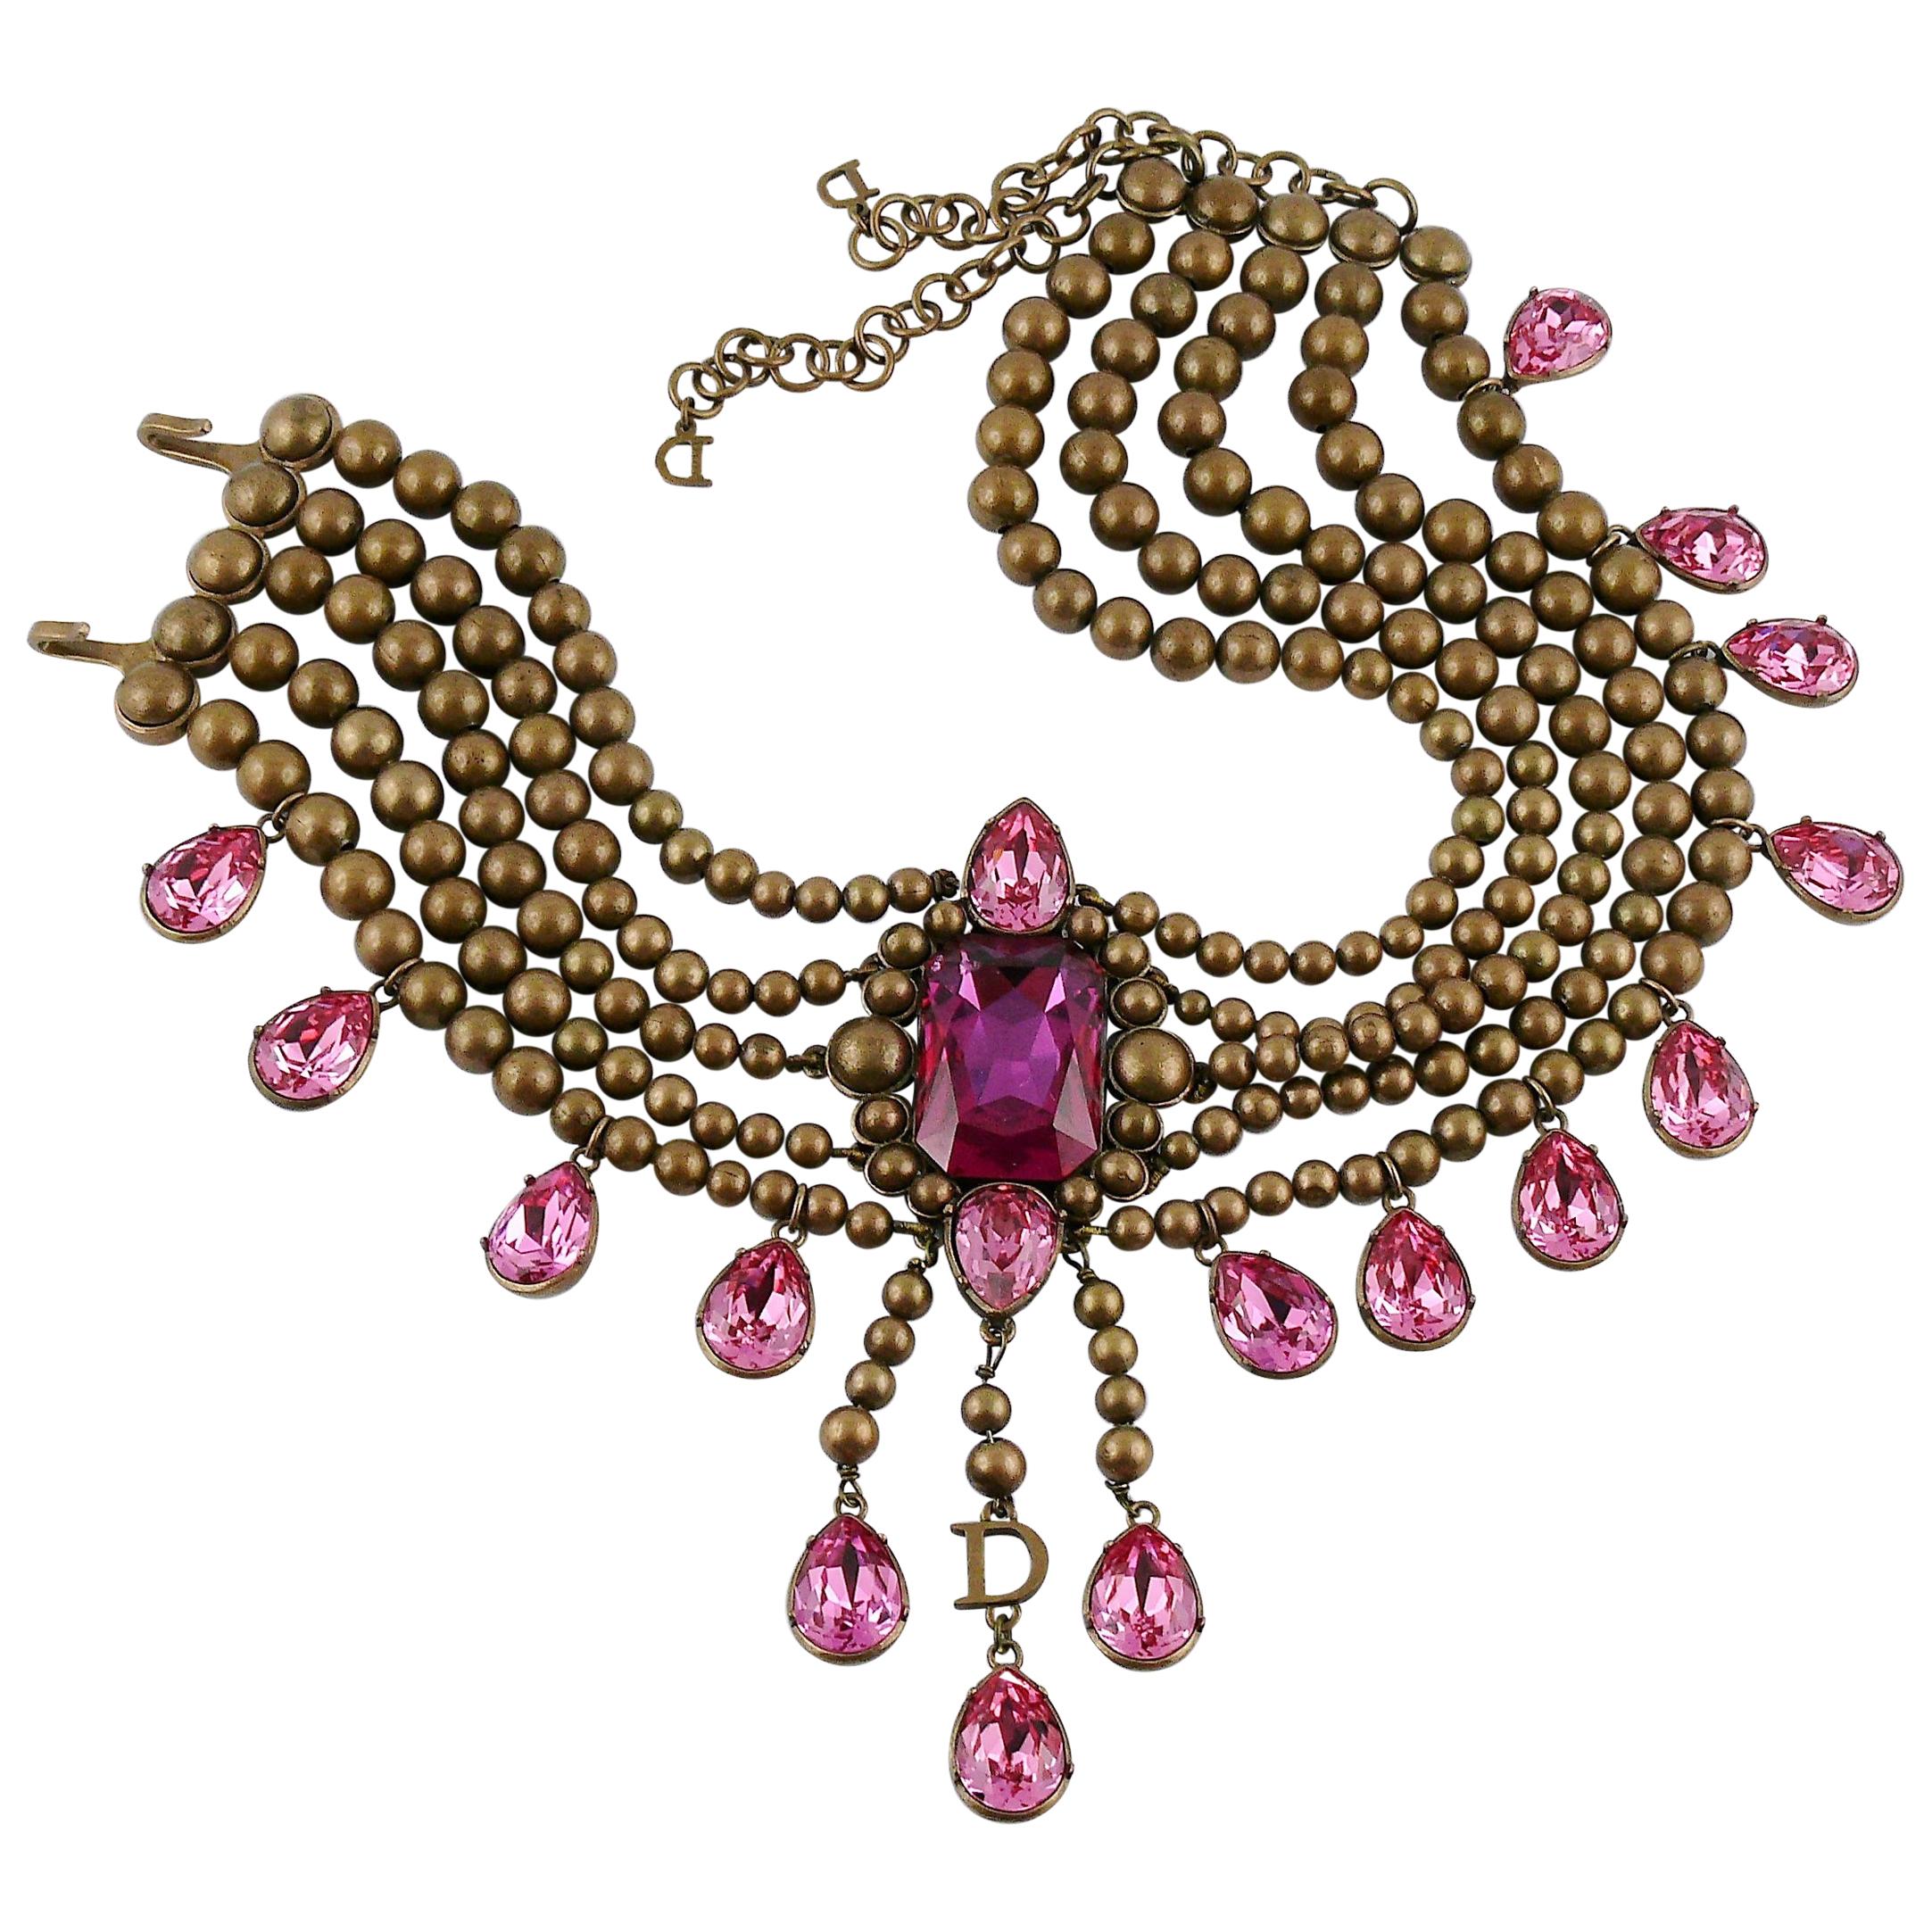 Christian Dior Jewelled Edwardian Choker Necklace